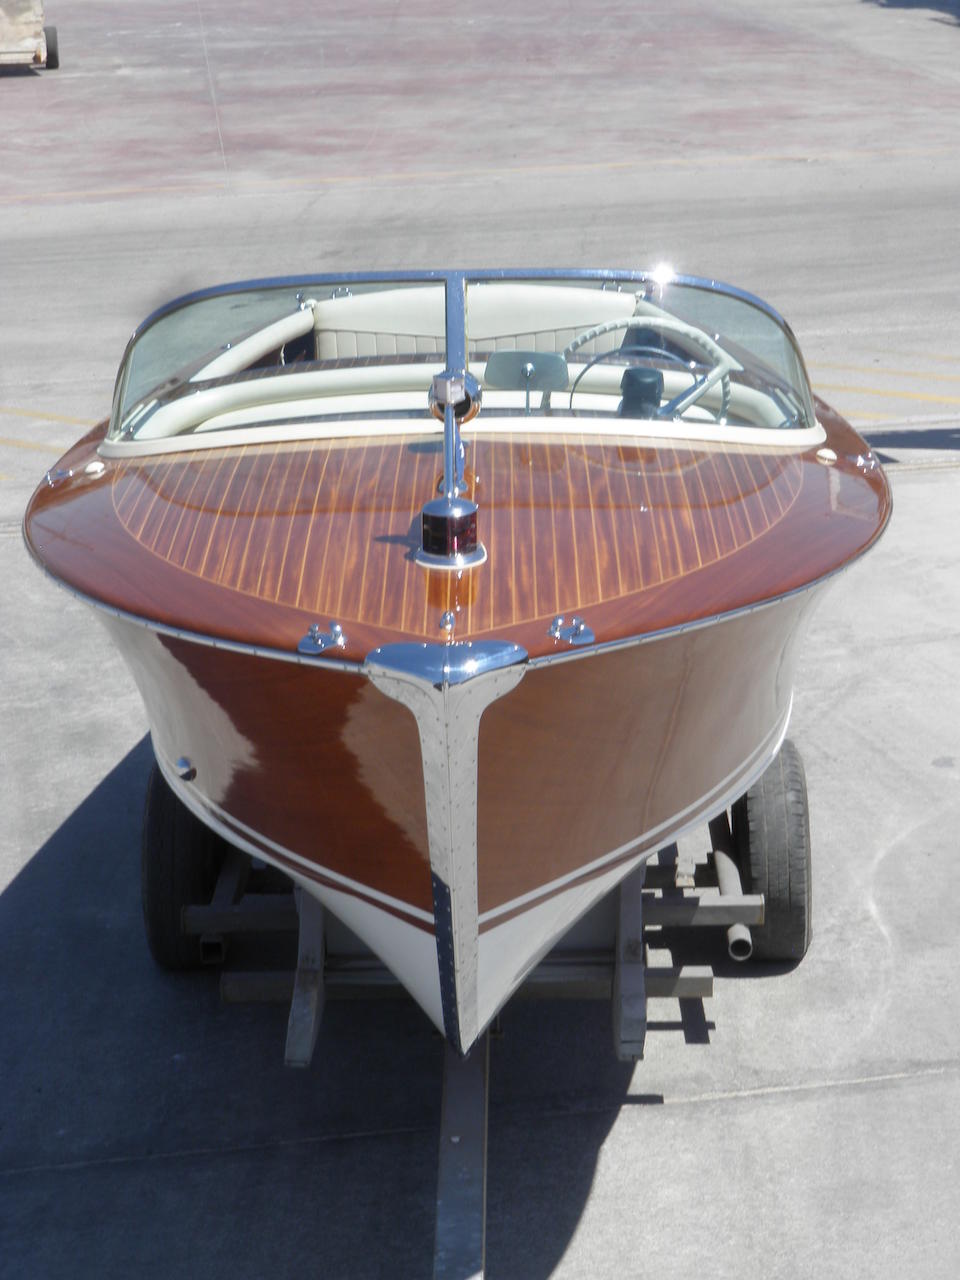 1963 Riva Florida sports boat "Swift",